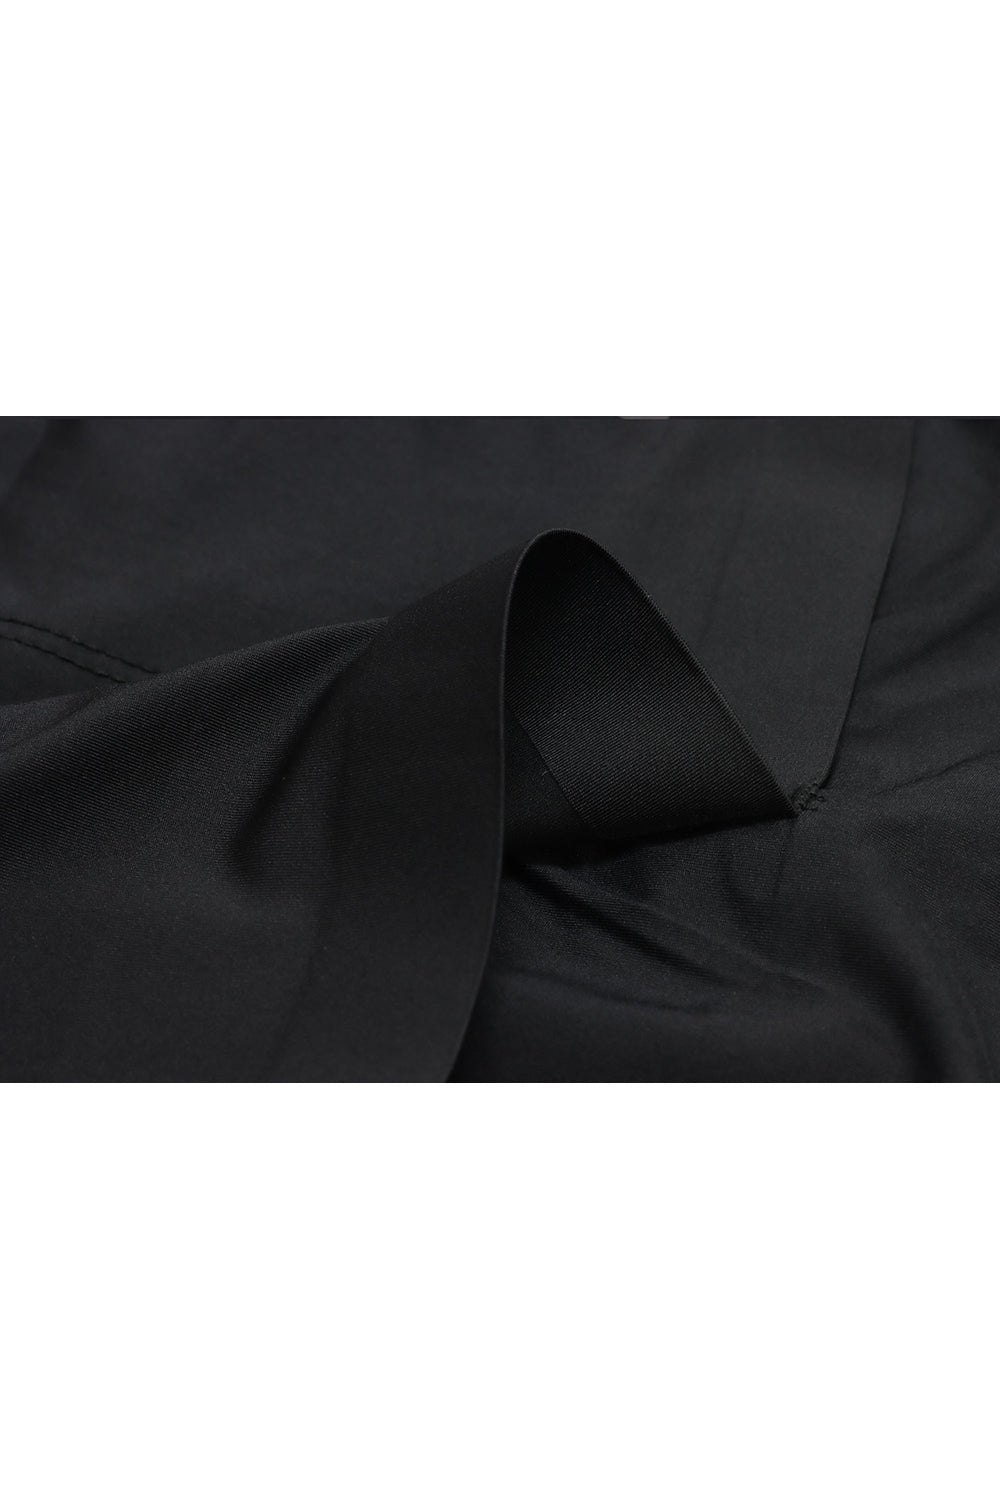 Sundried Sport Pianura Women's Black Short Sleeve Cycle Jersey Short Sleeve Jersey Activewear